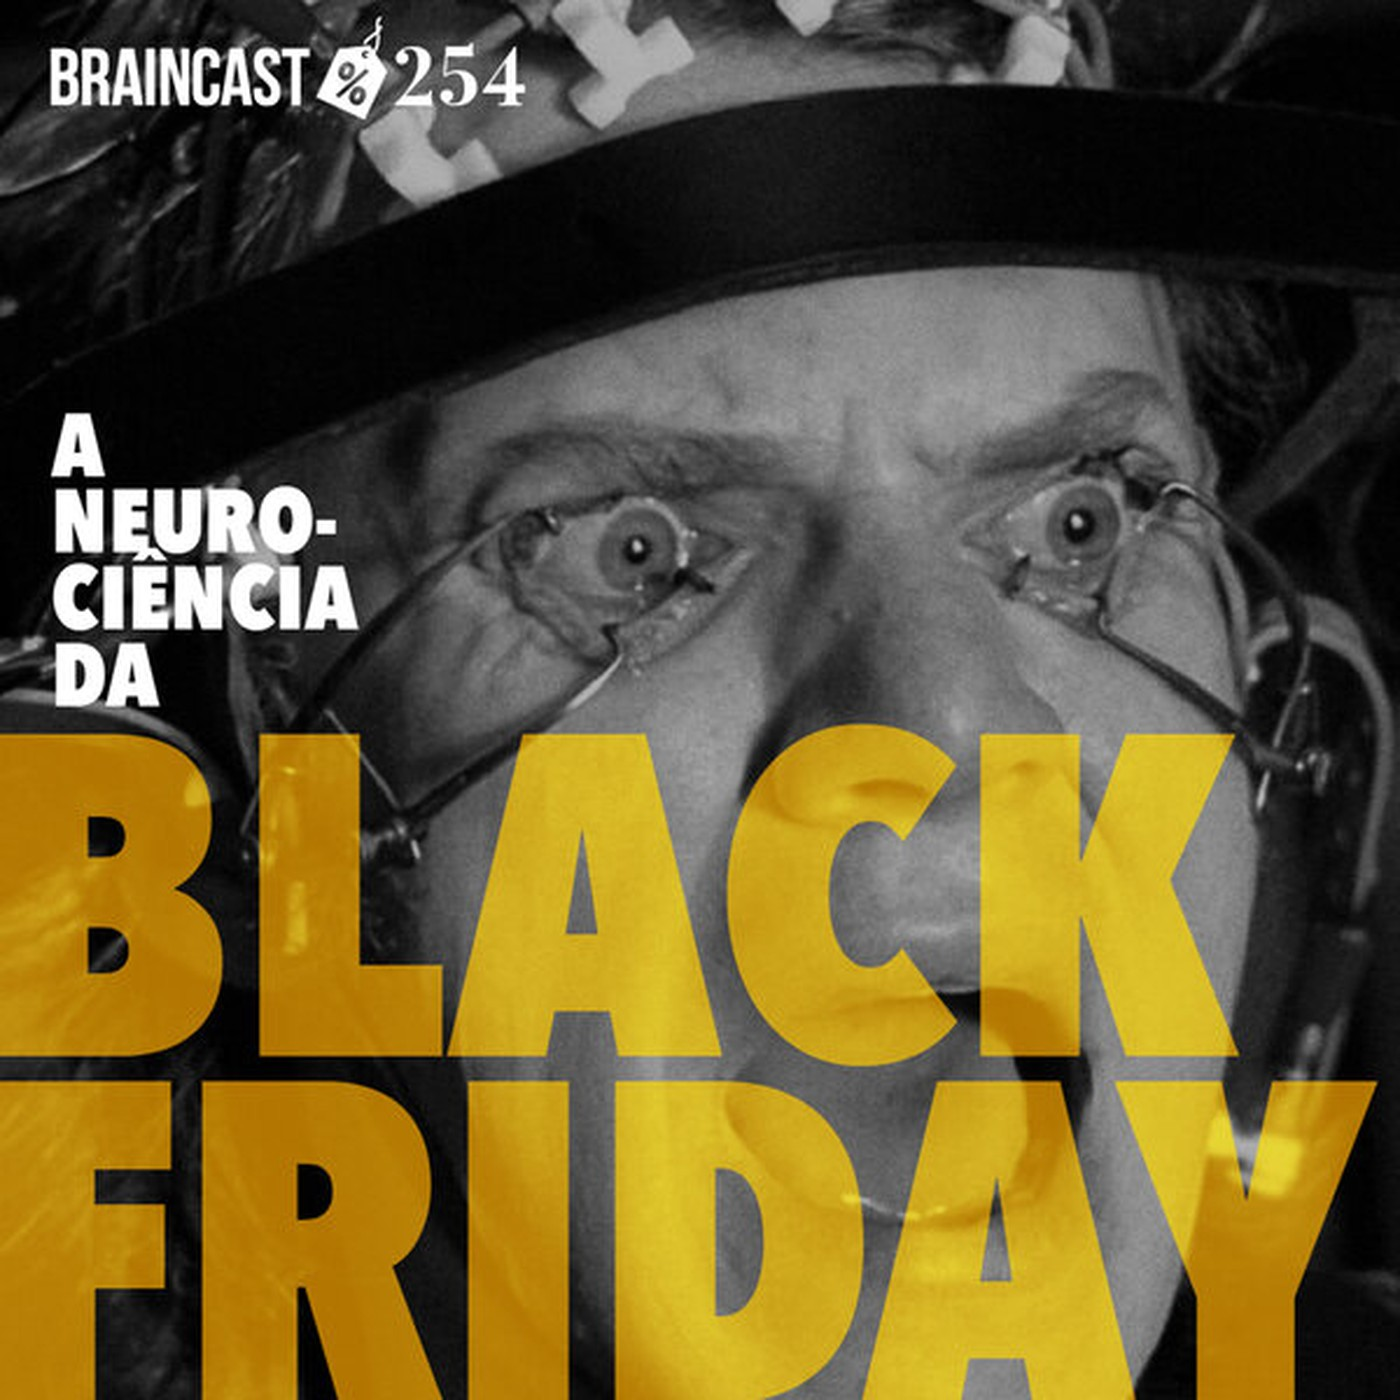 #254. A neurociência da Black Friday